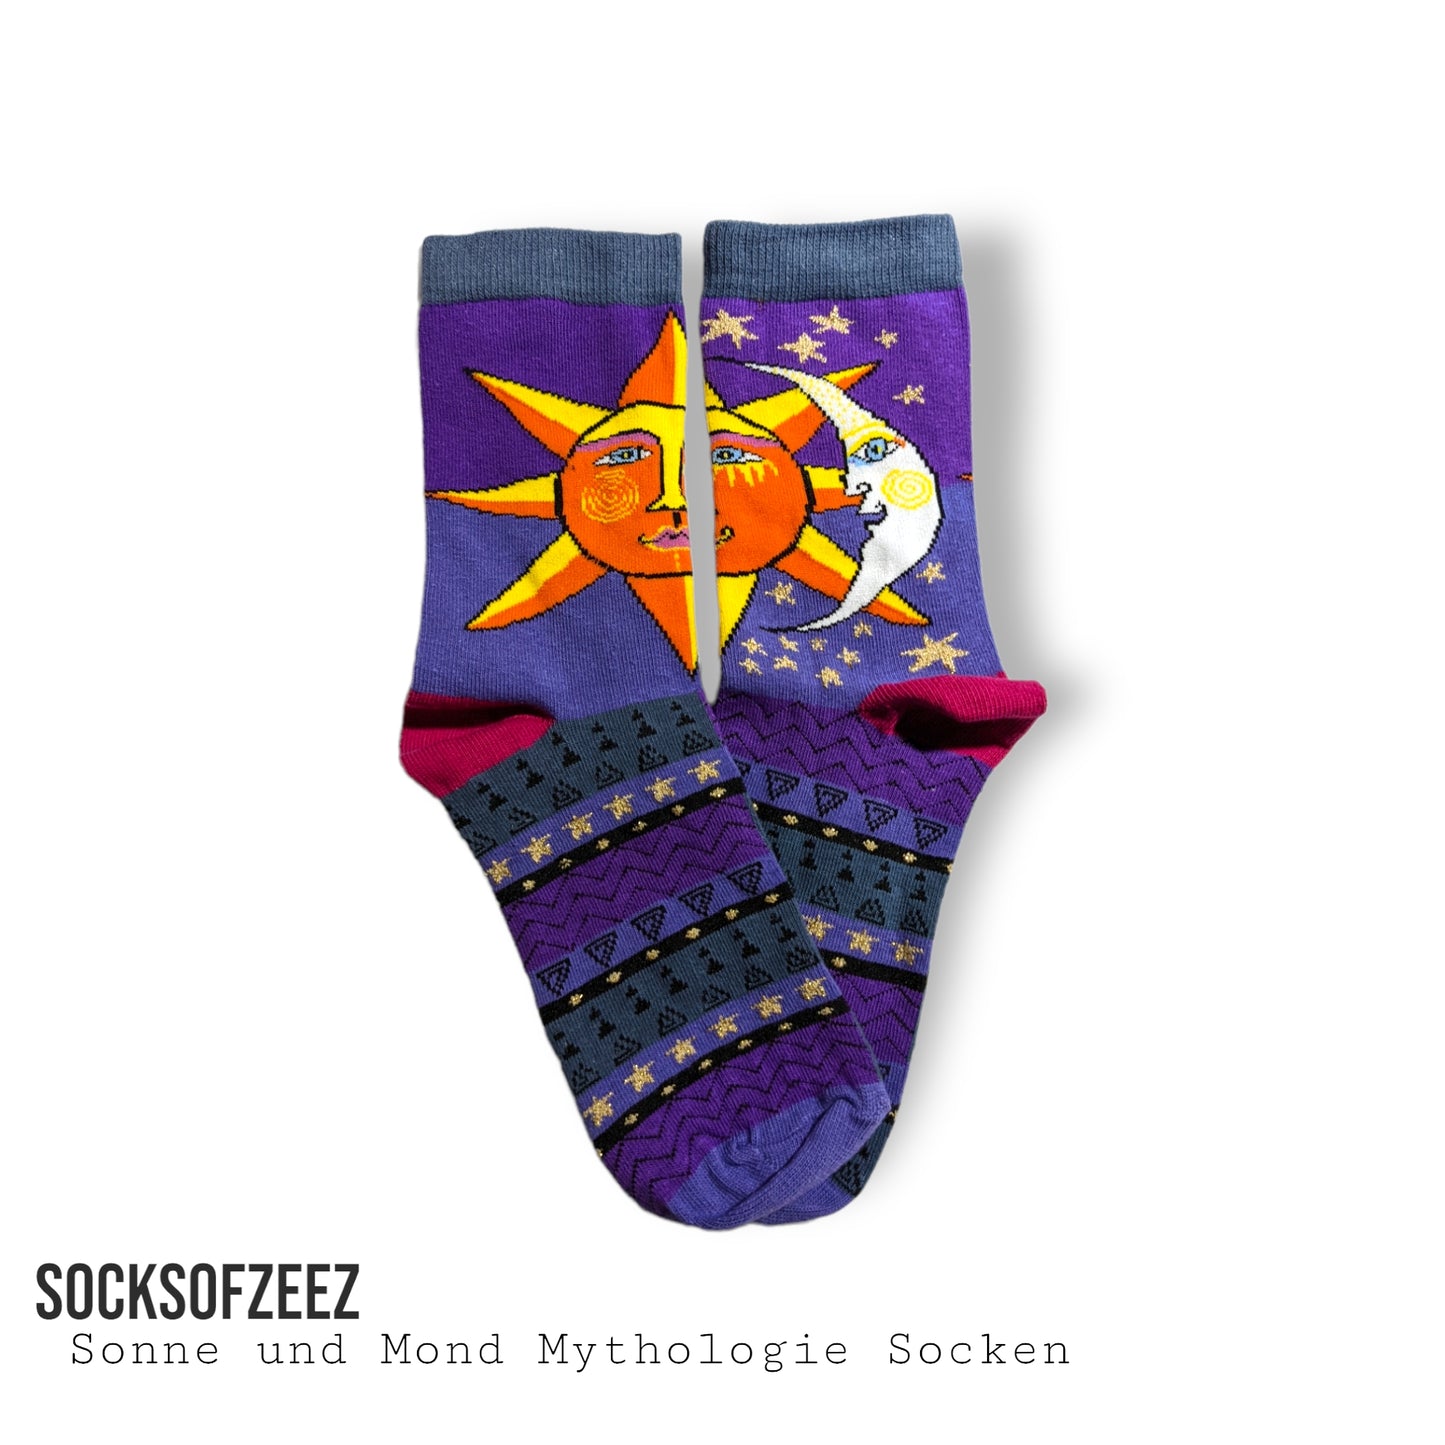 Sonne und Mond Mythologie Socken